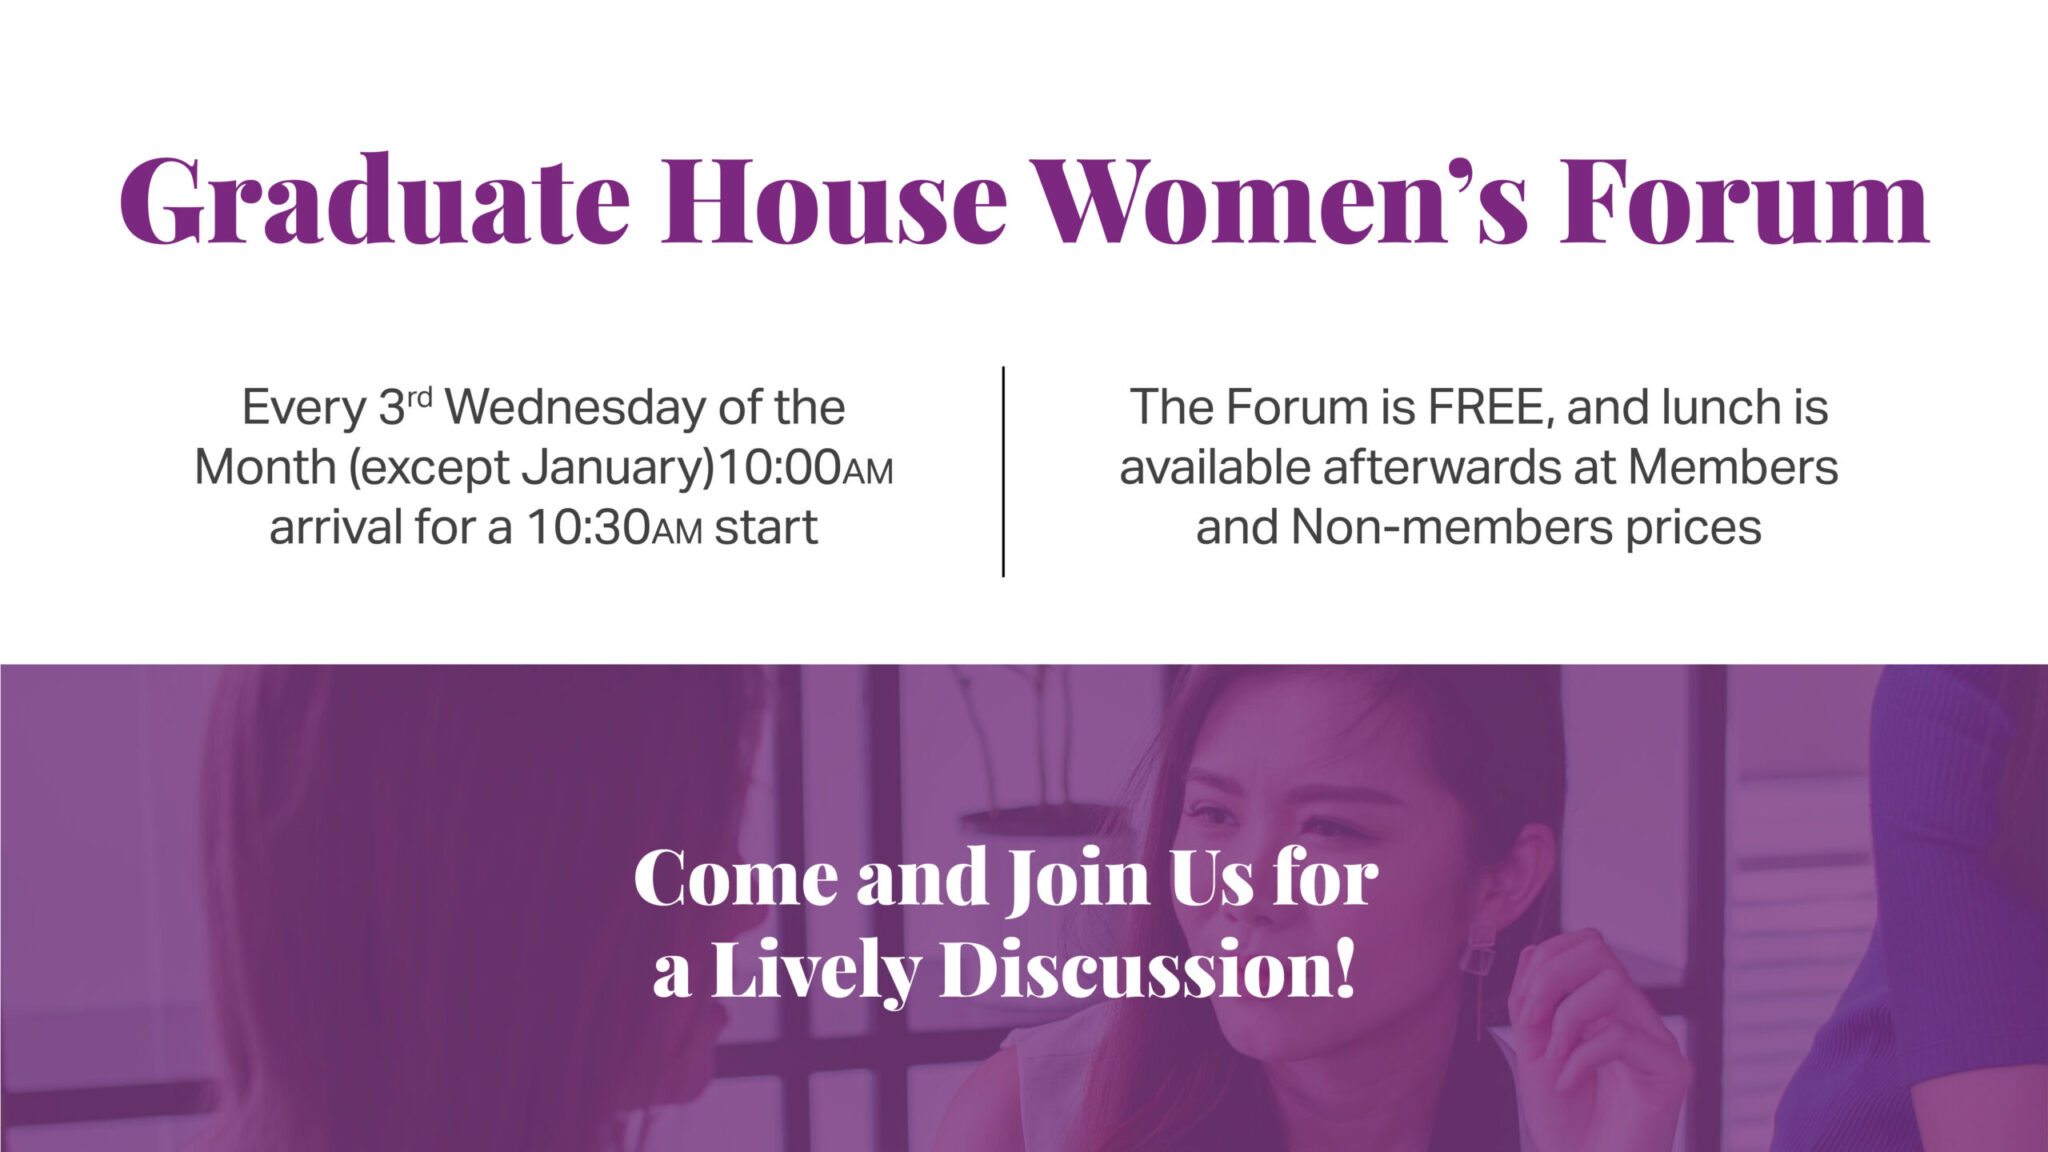 Image: Women's Forum at Graduate House